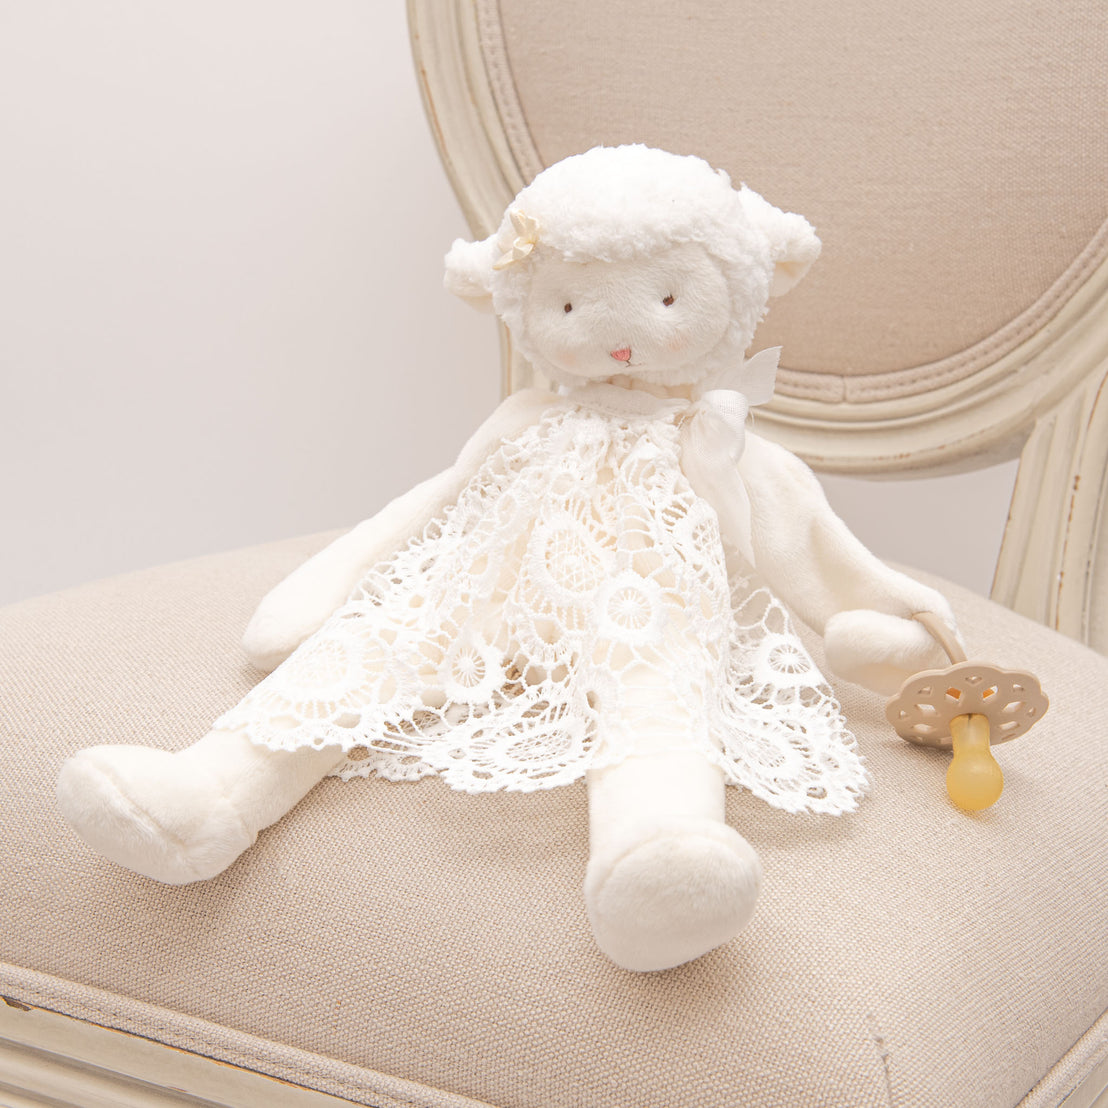 Lamb doll dressed in christening dress.